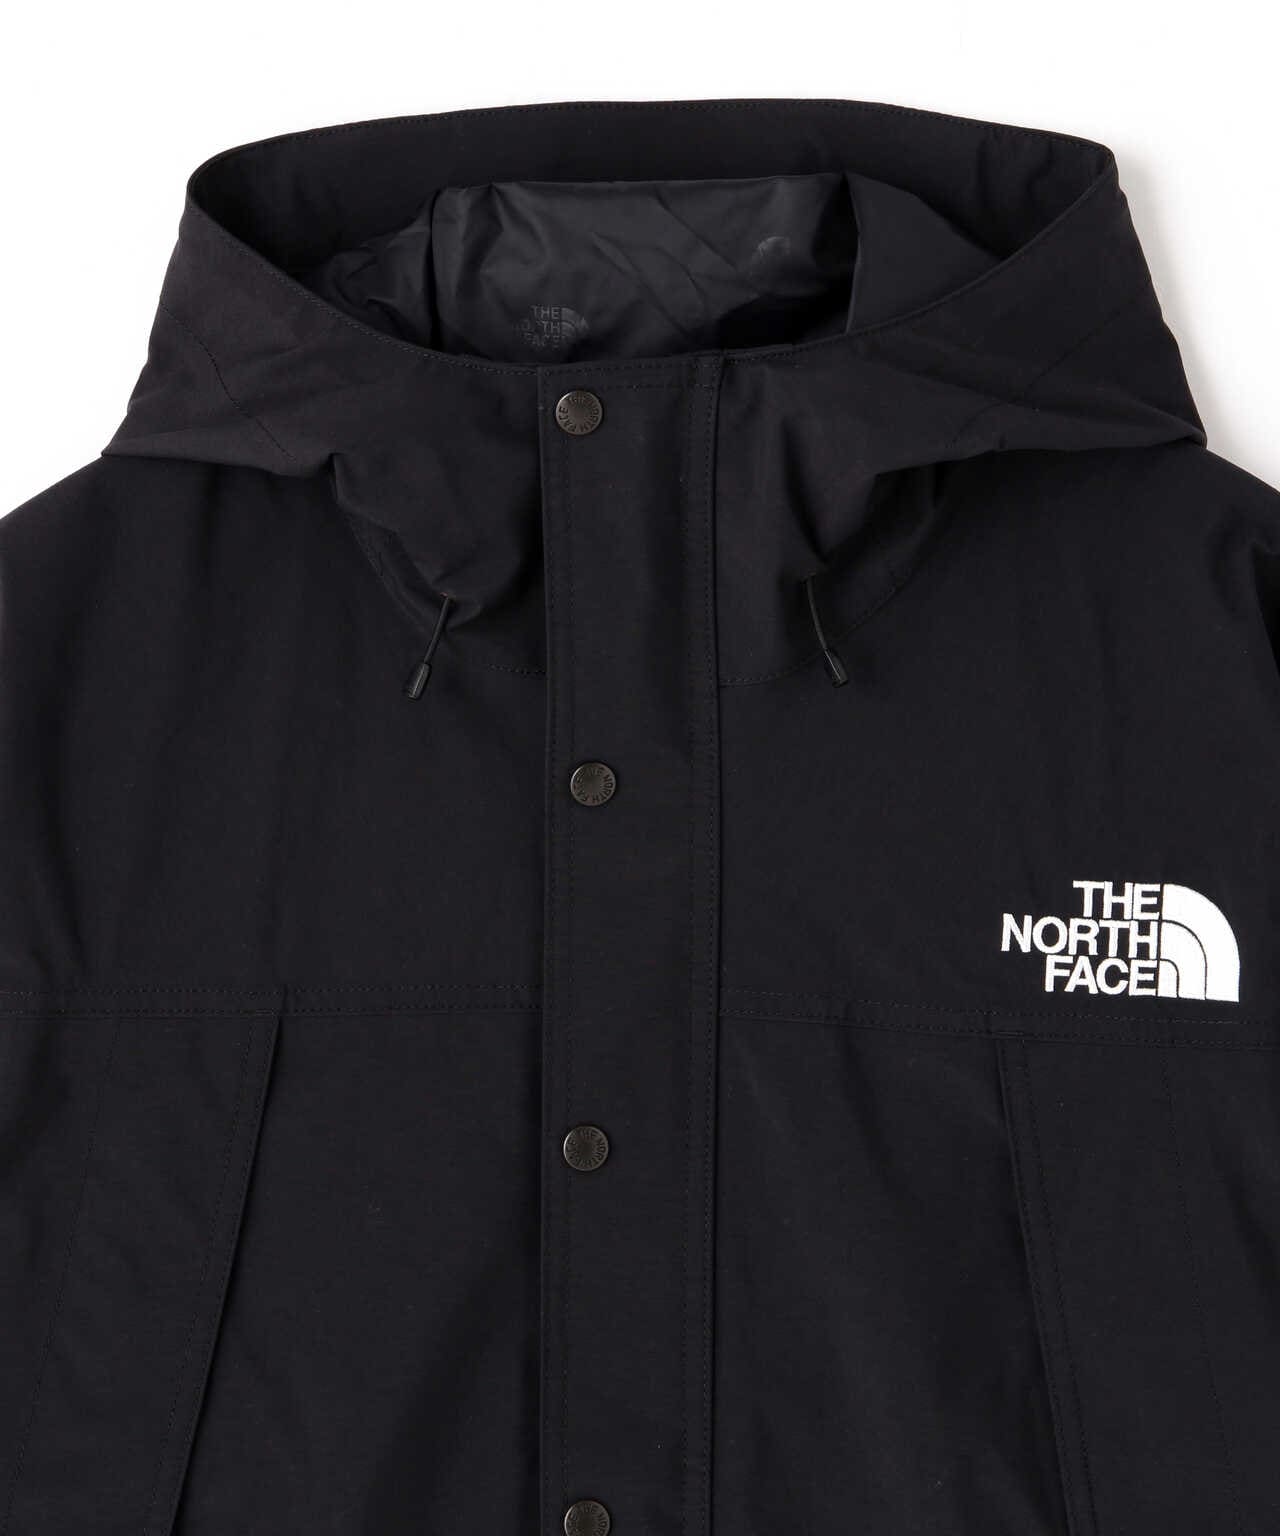 THE NORTH FACE/ザ・ノースフェイス/Mountain Light Jacket/マウンテン 